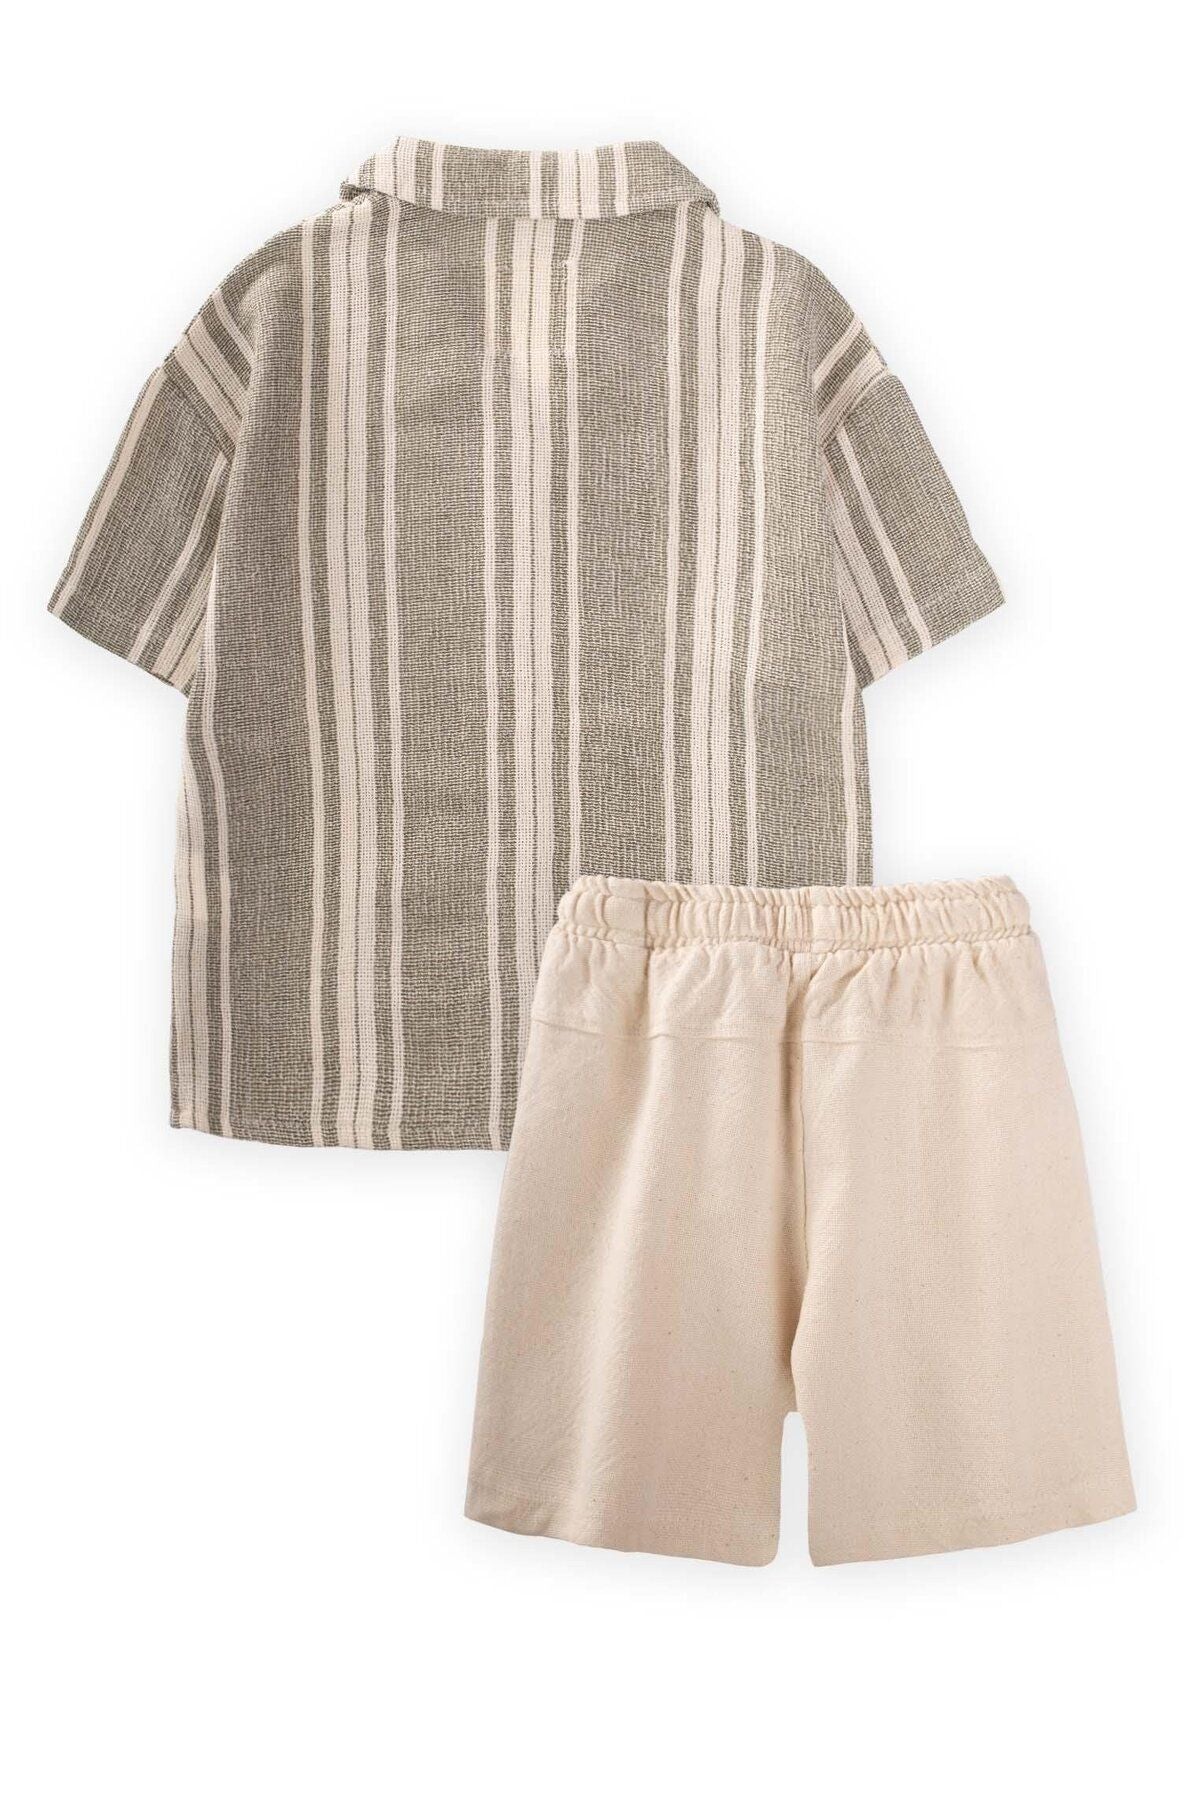 Striped linen hawai shirt set 2-10 years old green stripes